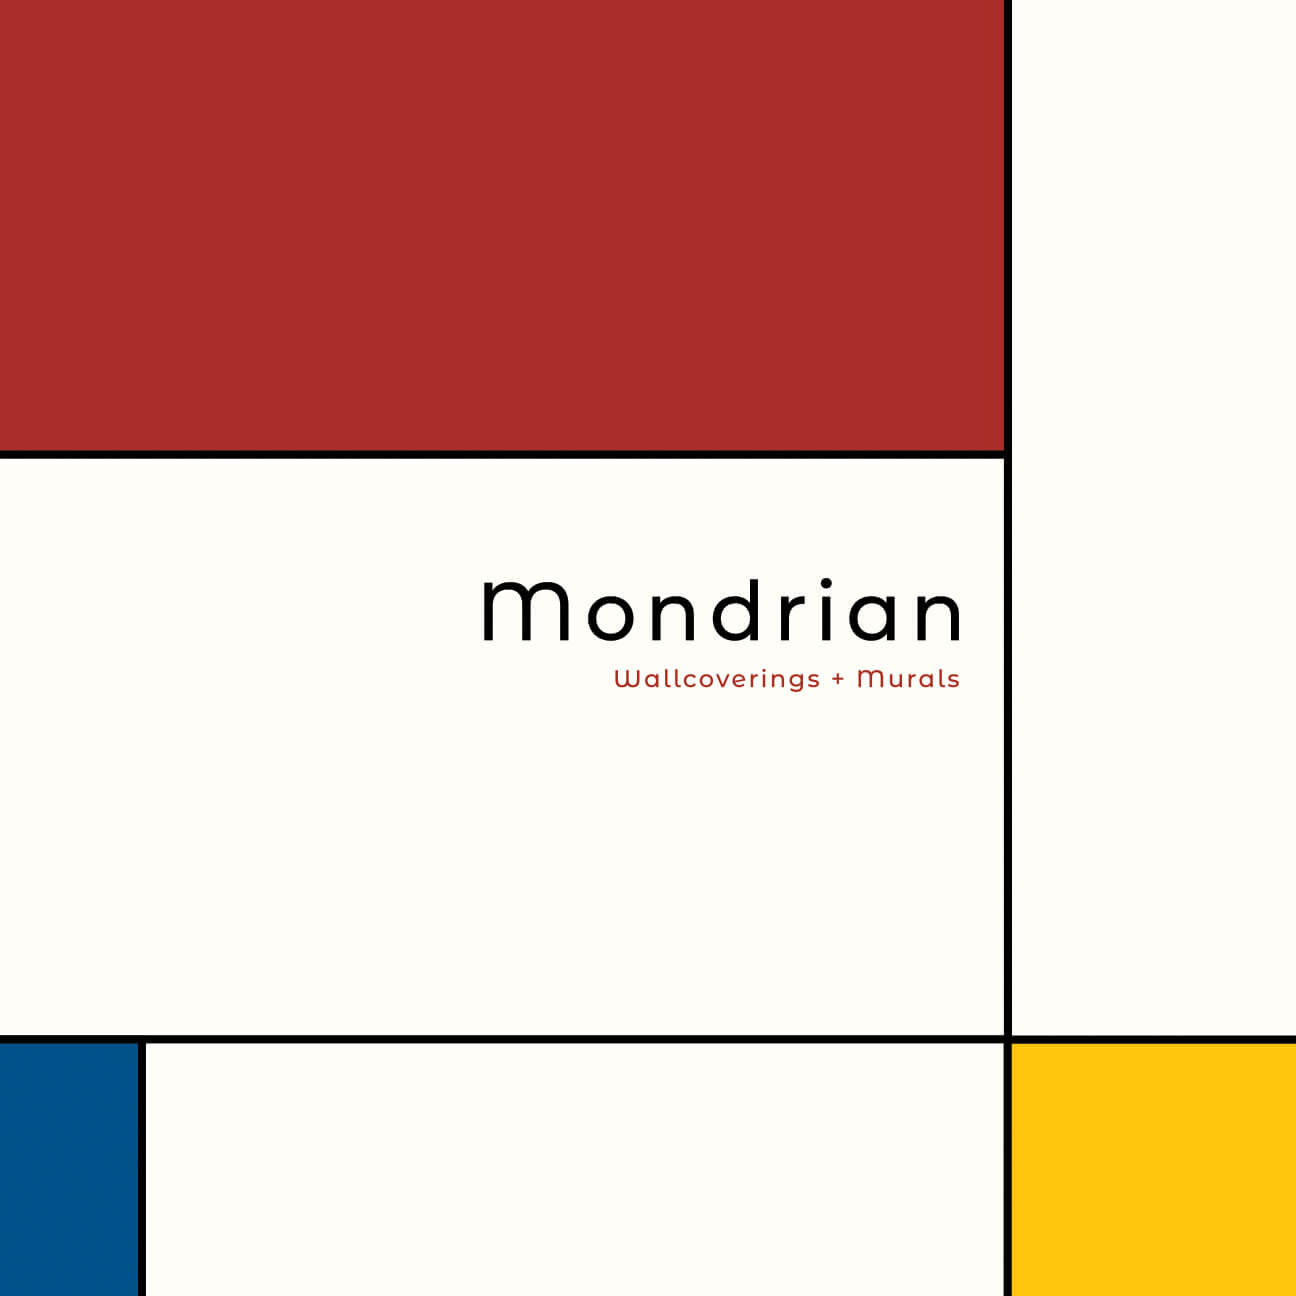 Seabrook Mondrian Deco Wallpaper - French Vanilla Pavestone